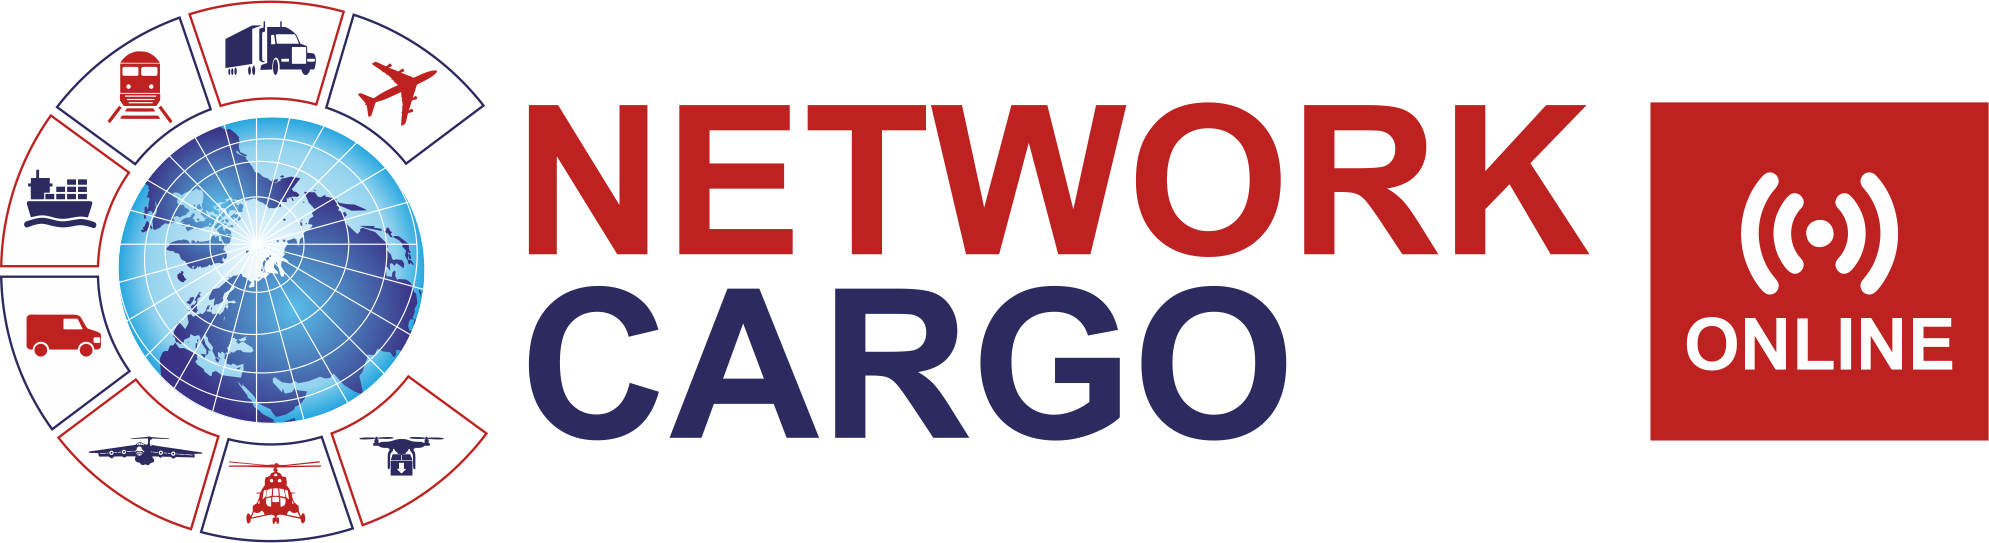 NETWORK CARGO - Форум по развитию грузовых маршрутов